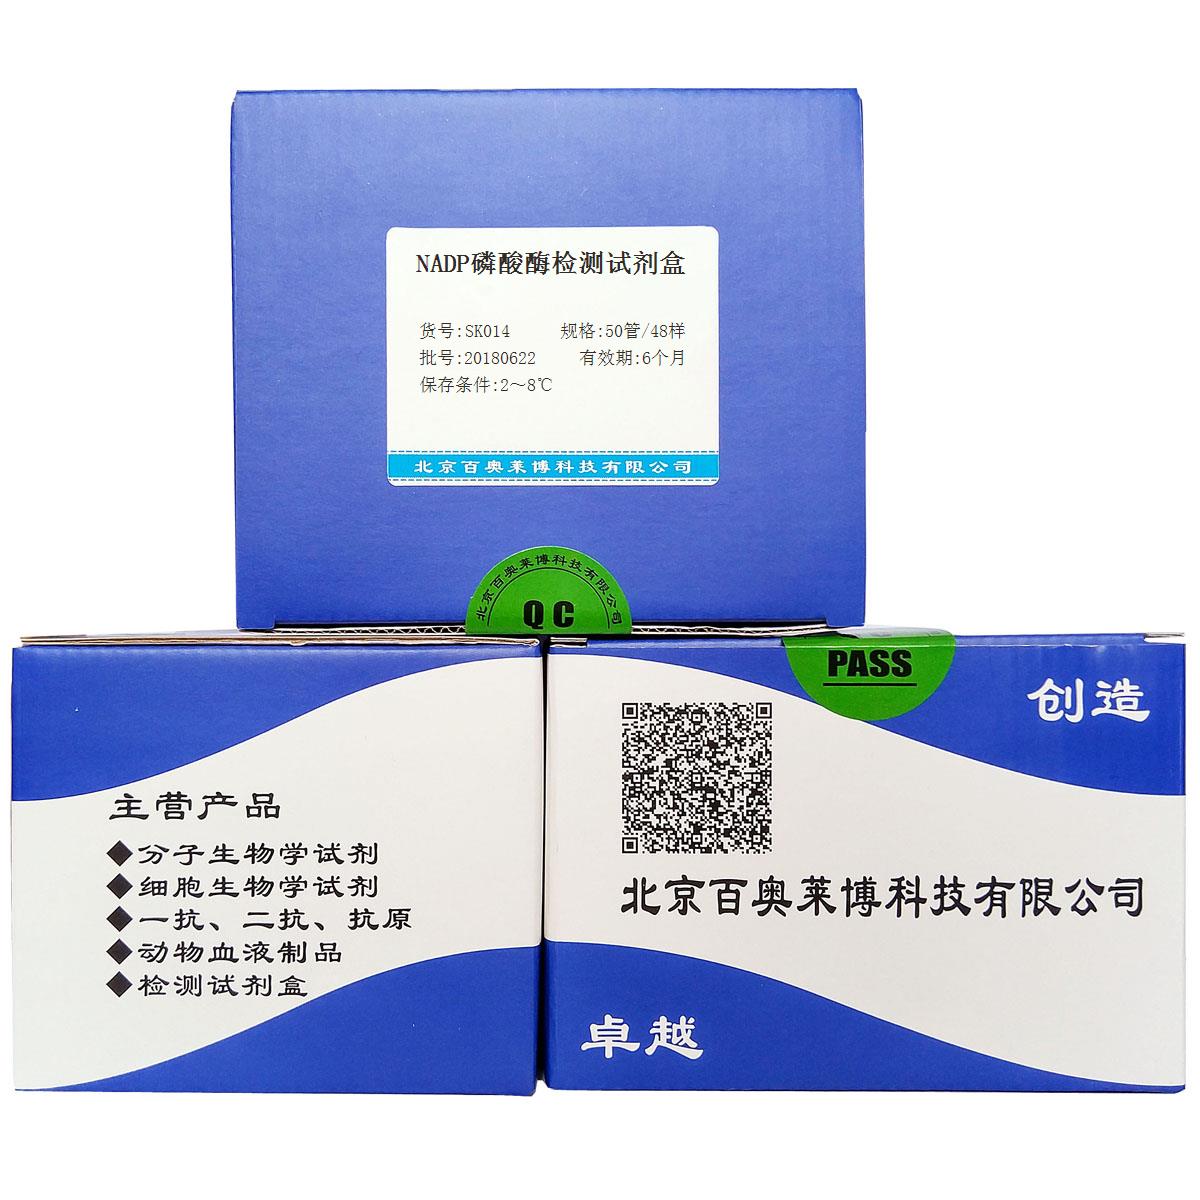 NADP磷酸酶检测试剂盒 生化检测试剂盒